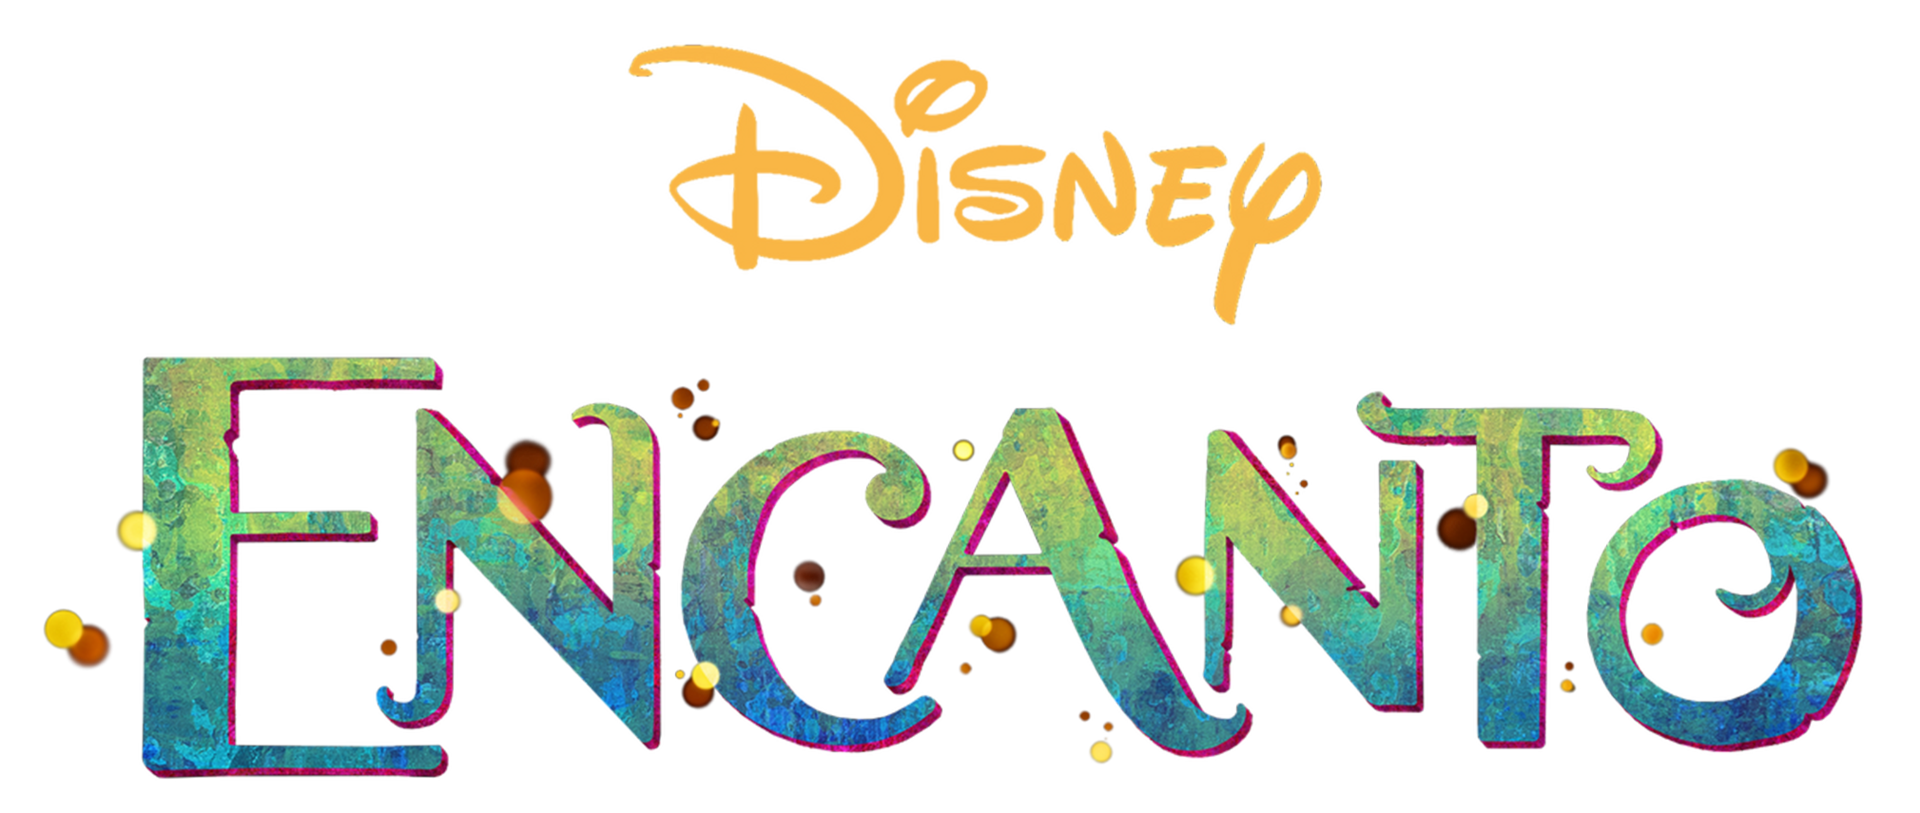 https://atuttomondo.unint.eu/wp-content/uploads/2021/12/Disneys_Encanto_logo.png